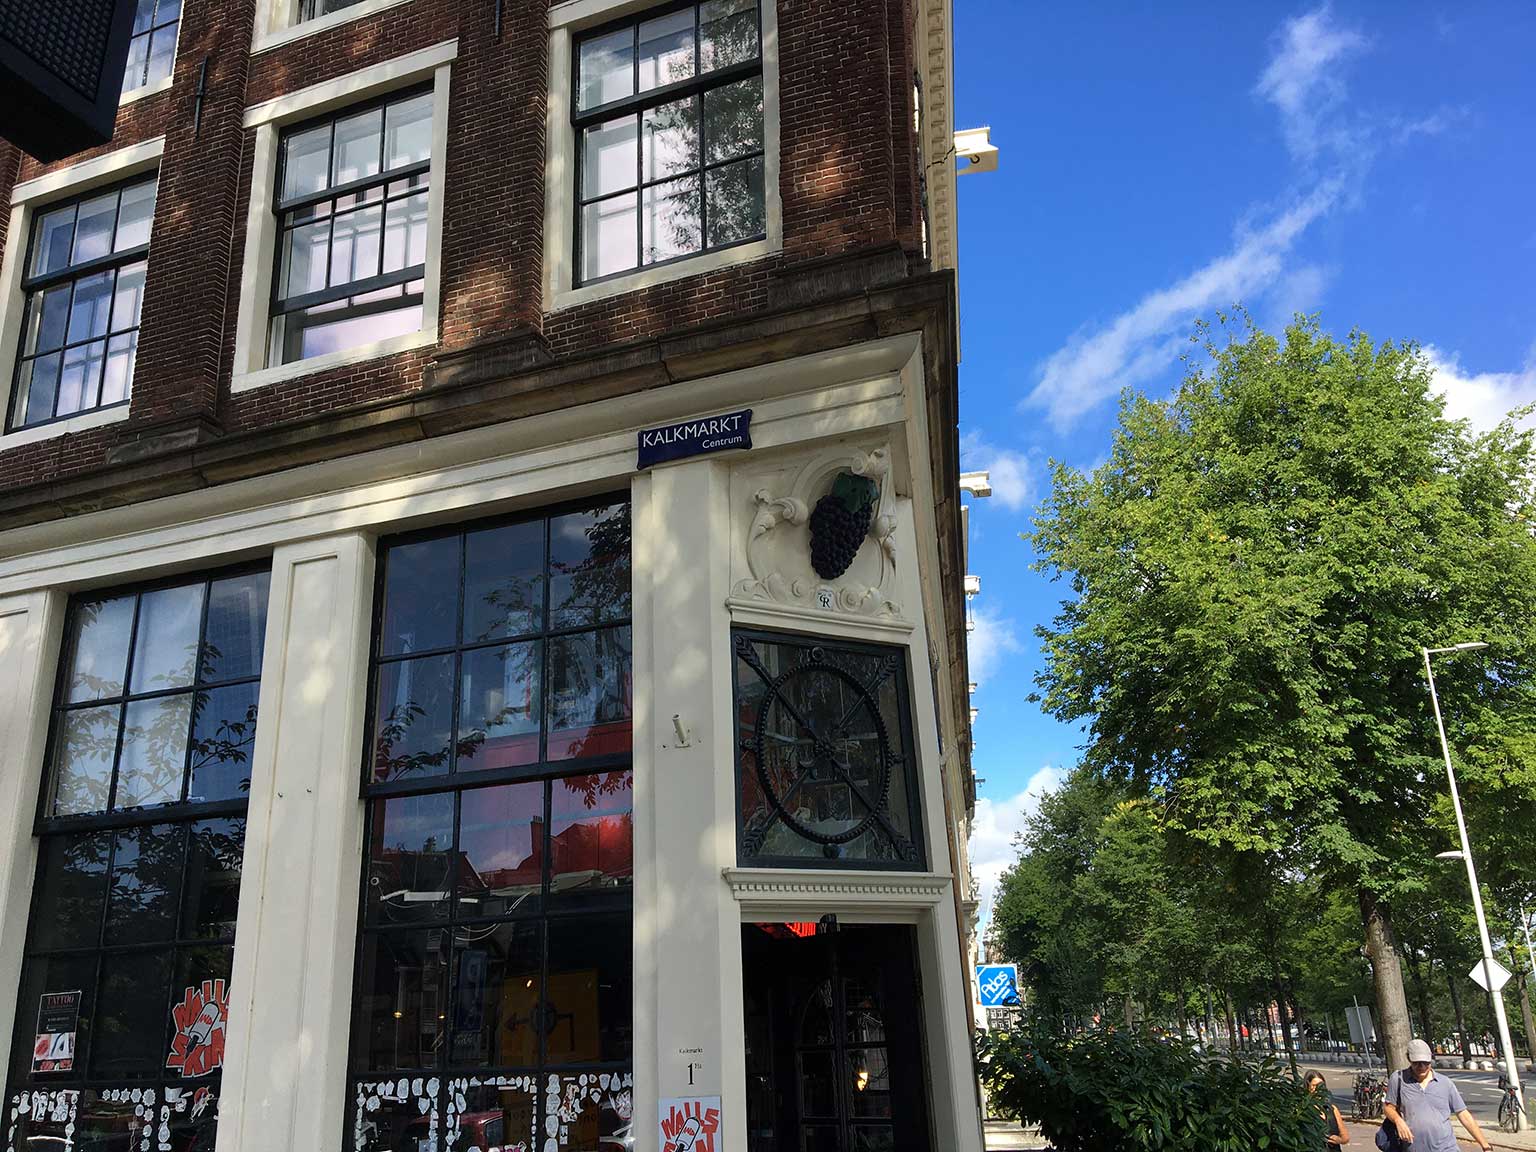 De Blauwe Druif on Kalkmarkt 1, Amsterdam, corner Prins Hendrikkade 156